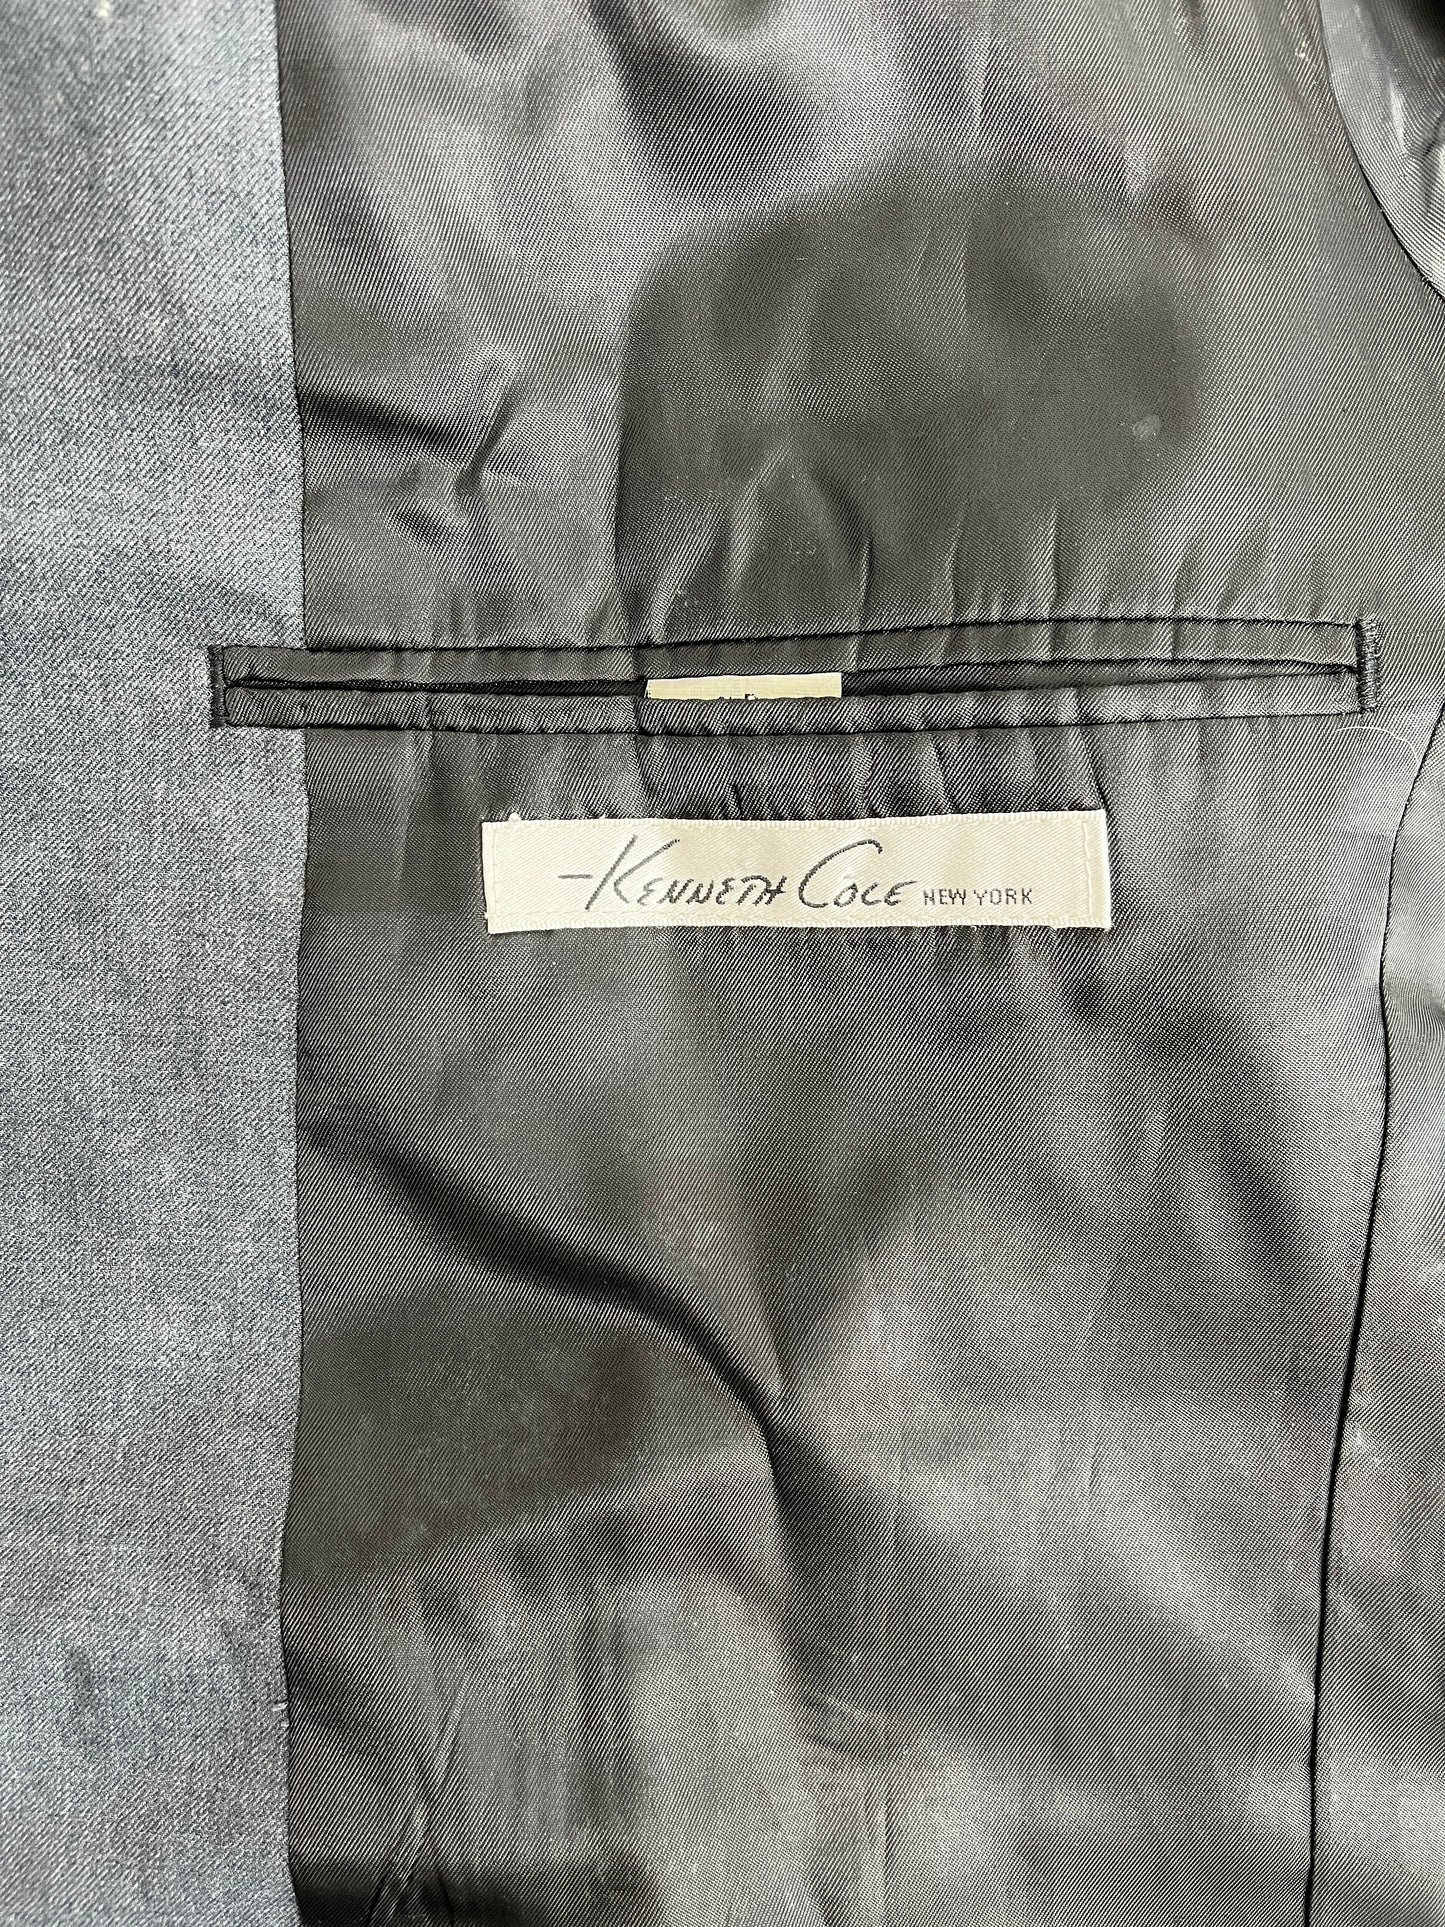 Kenneth Cole Jacket Dark Gray Size 40L SKU 000441